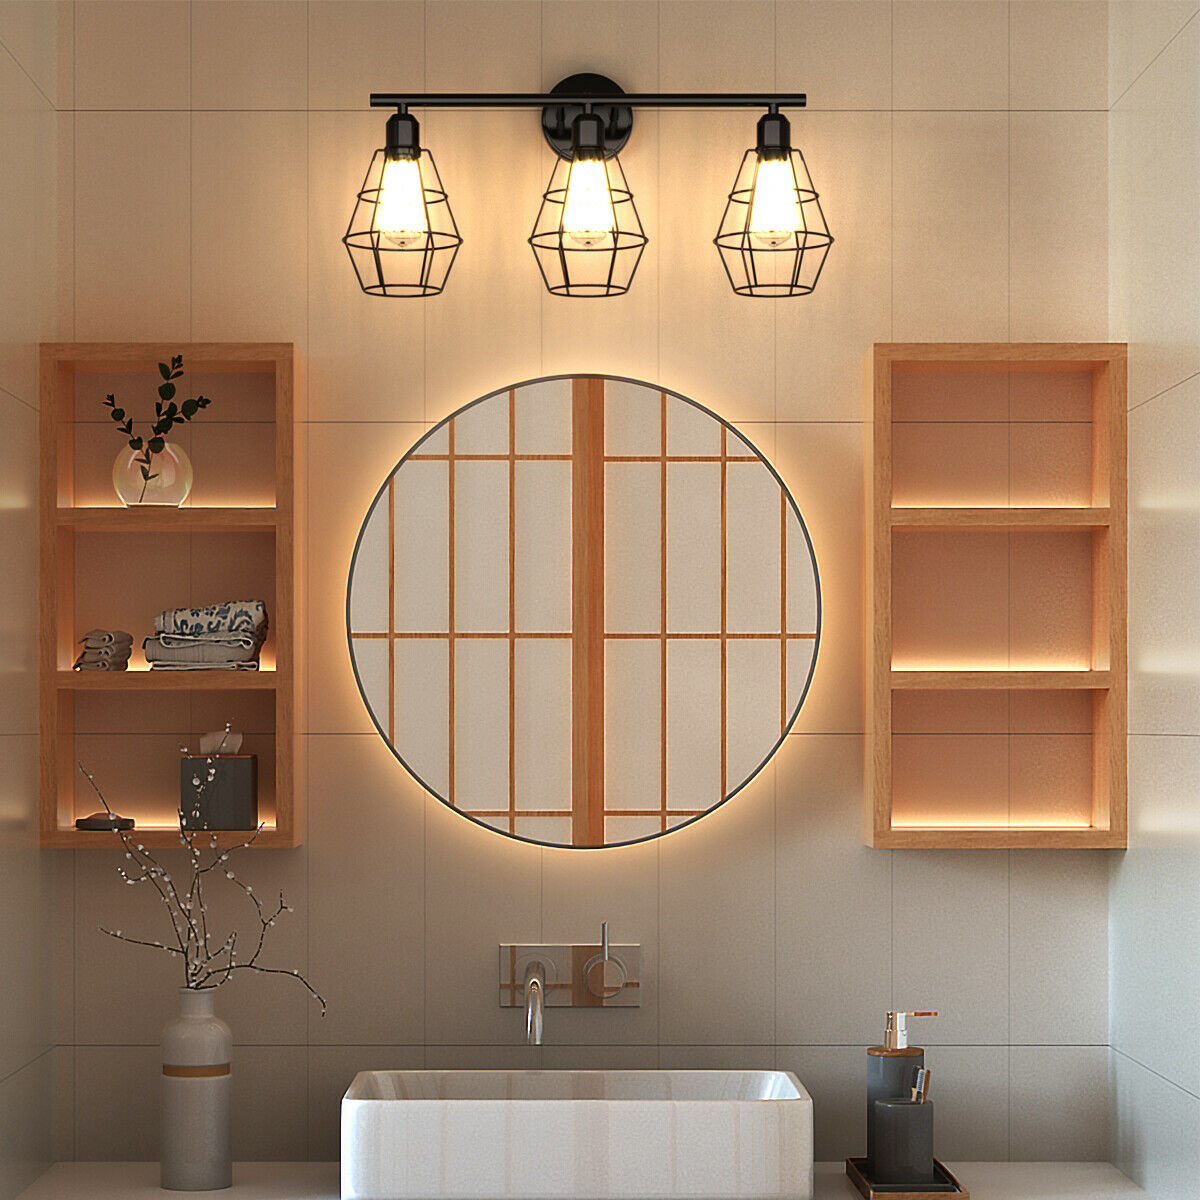 3-light Industrial Bathroom Vanity Cage Light Vintage Wall Lamp Sconces Hallway